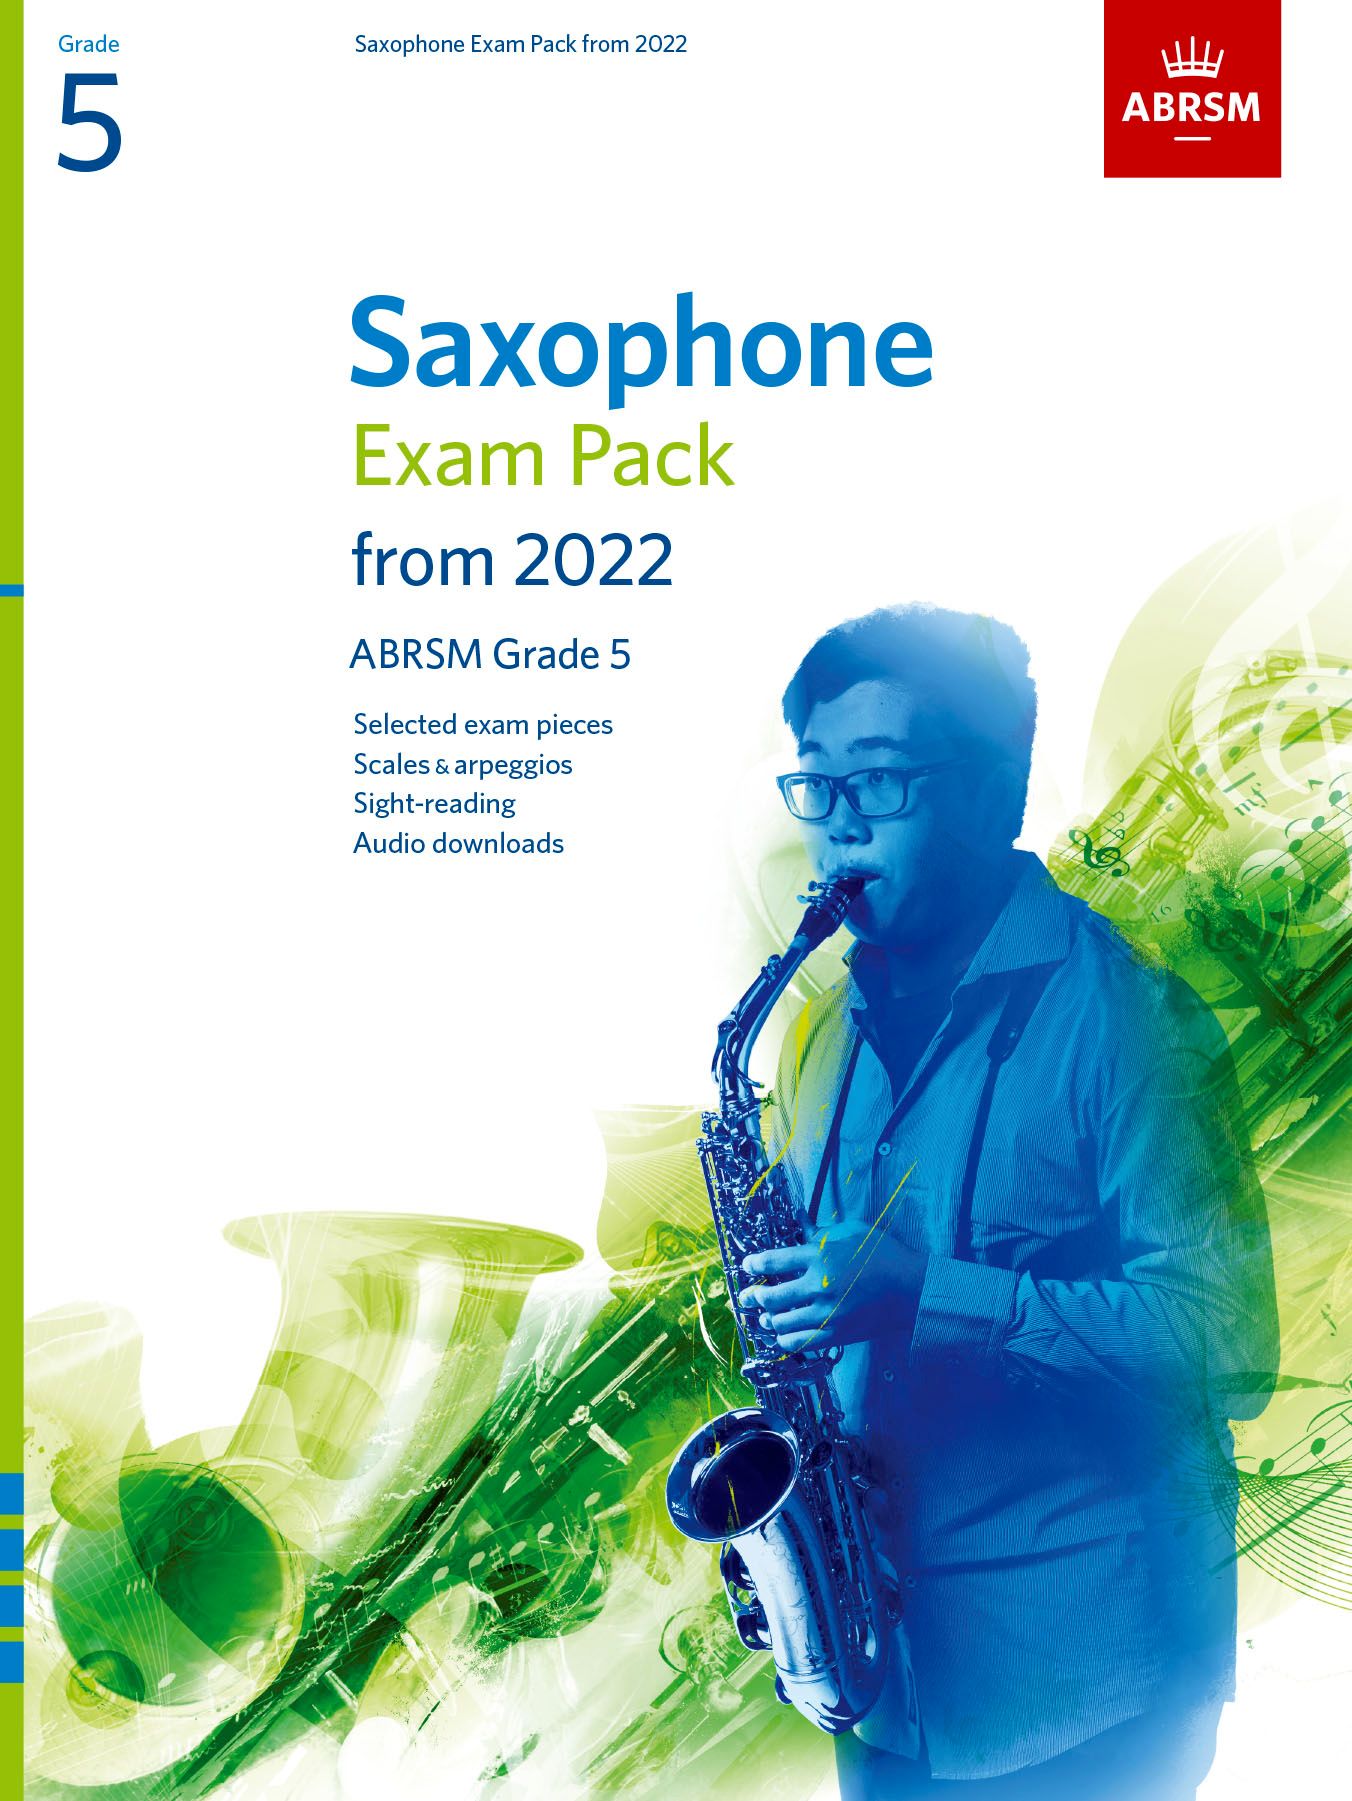 ABRSM Saxophone Exam Pack from 2022, ABRSM Grade 5